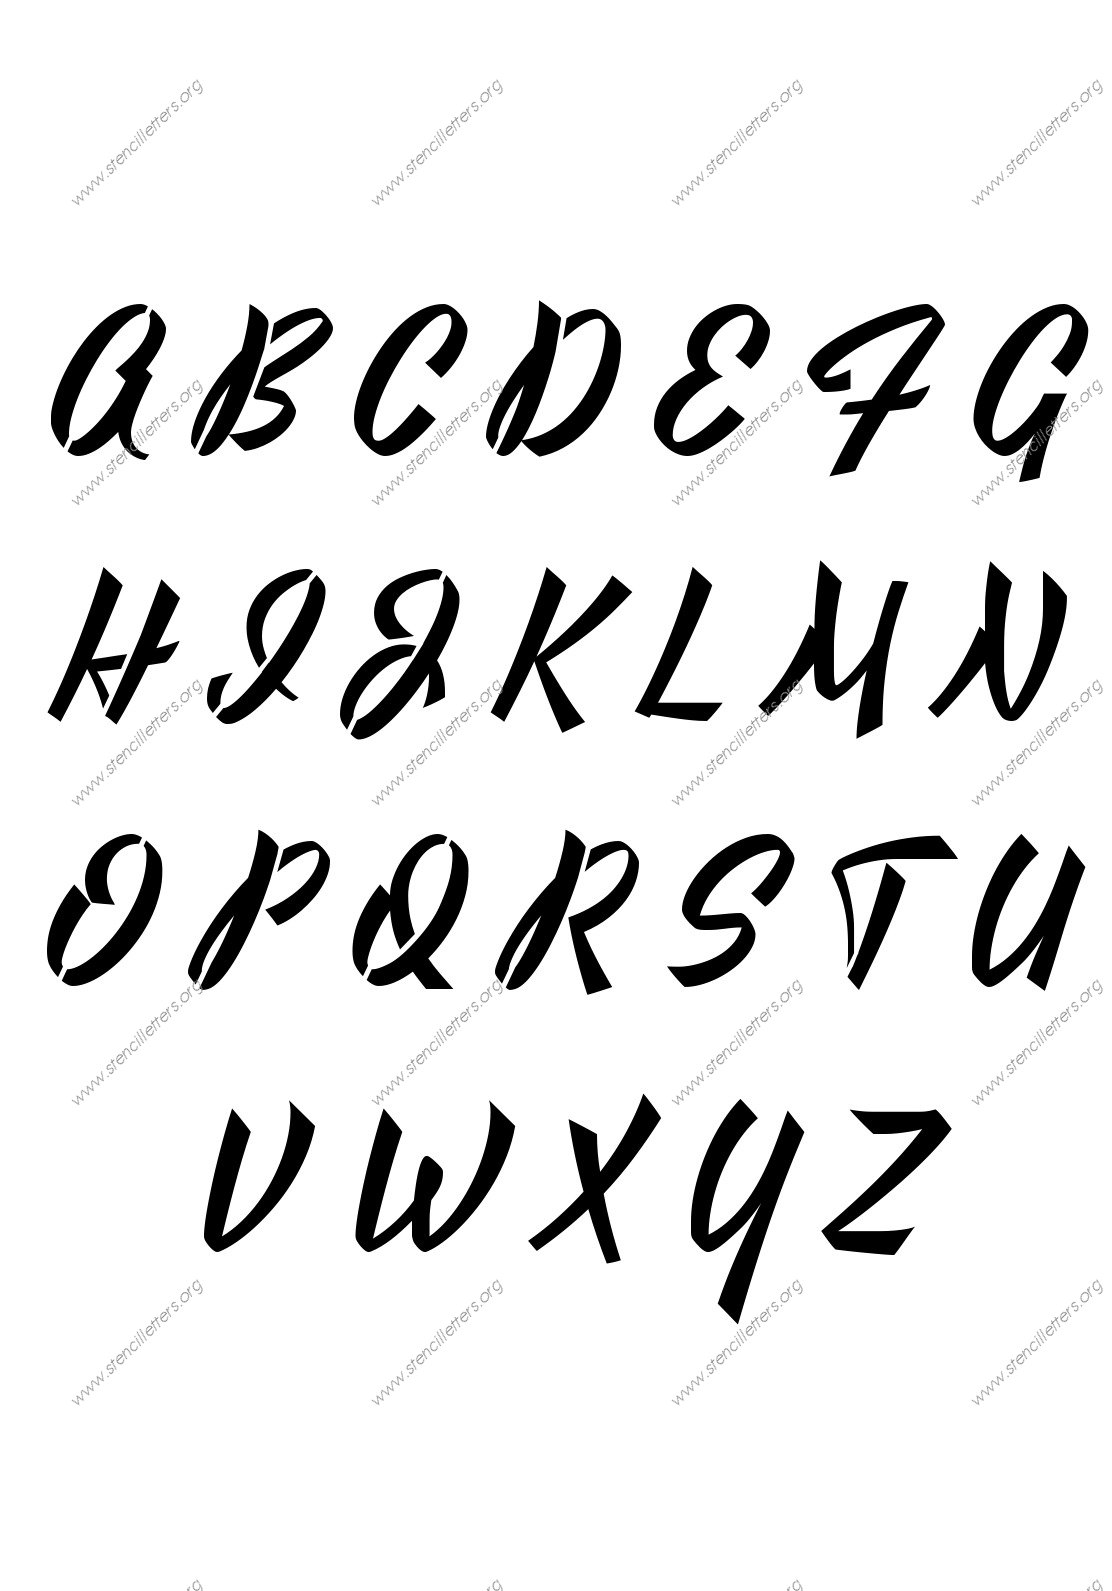 1940s Brushed Cursive A to Z alphabet stencils